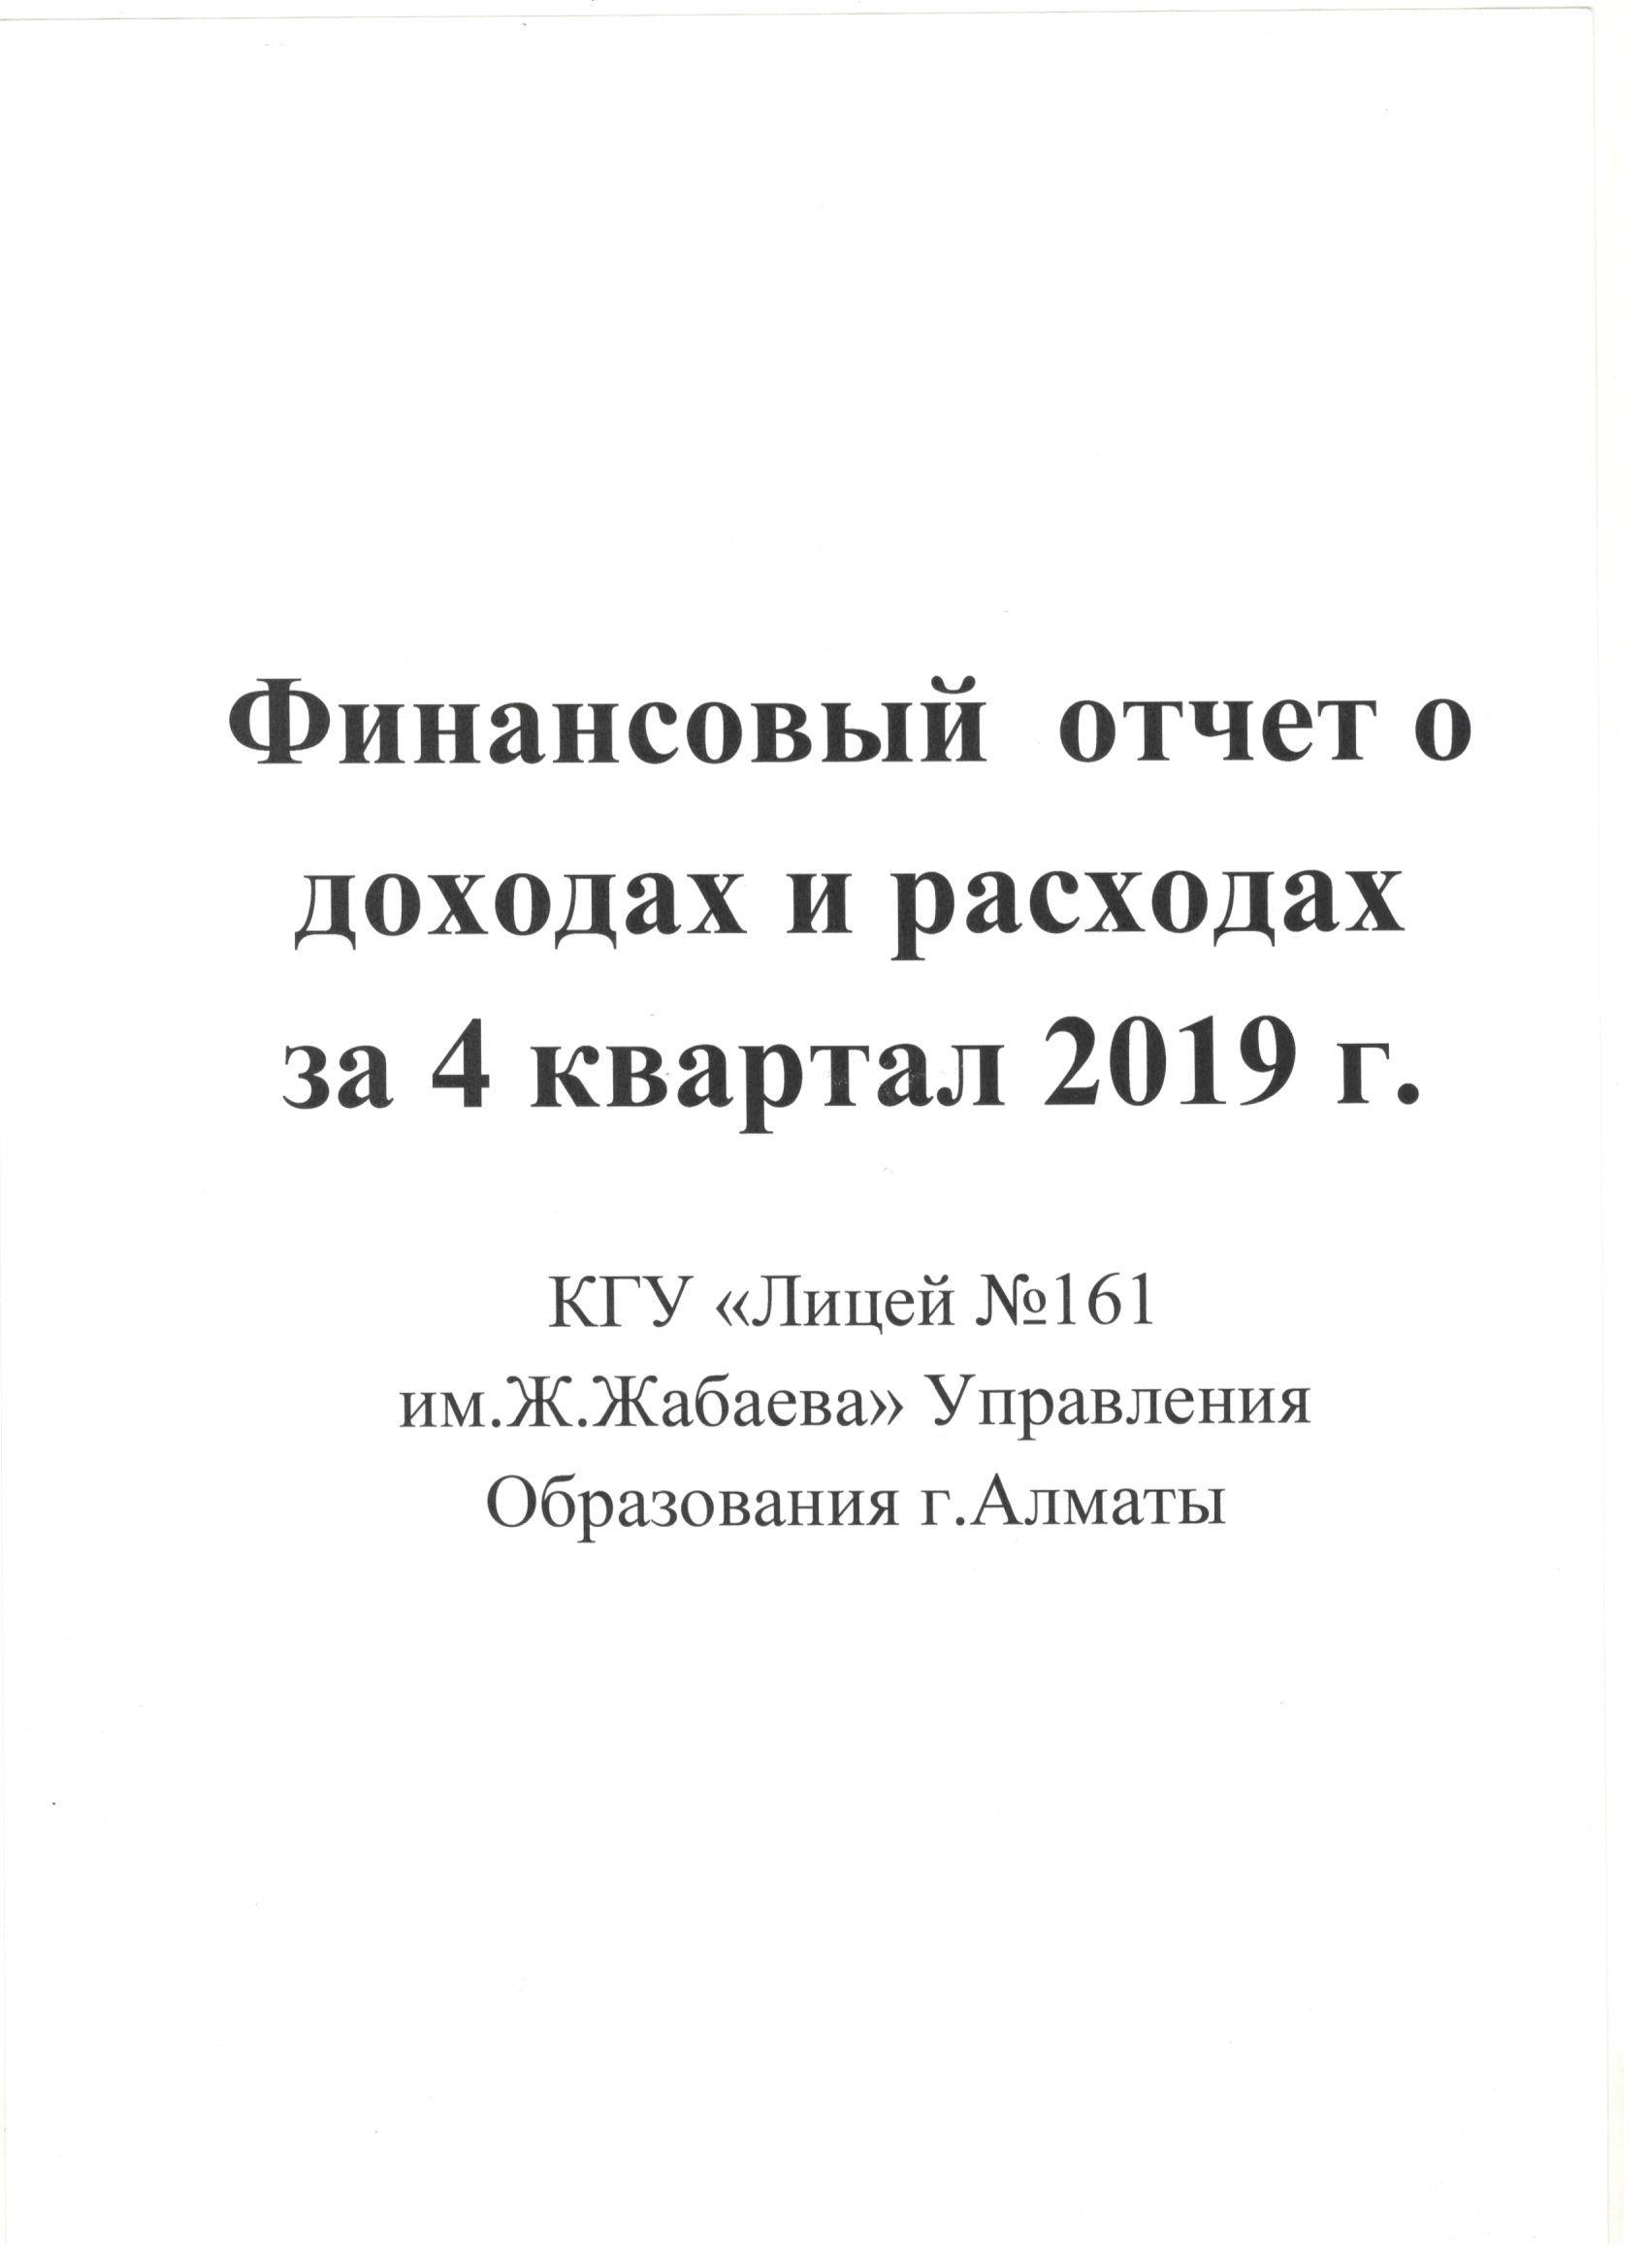 Отчет о доходах и расходах за 4 квартал 2019 год